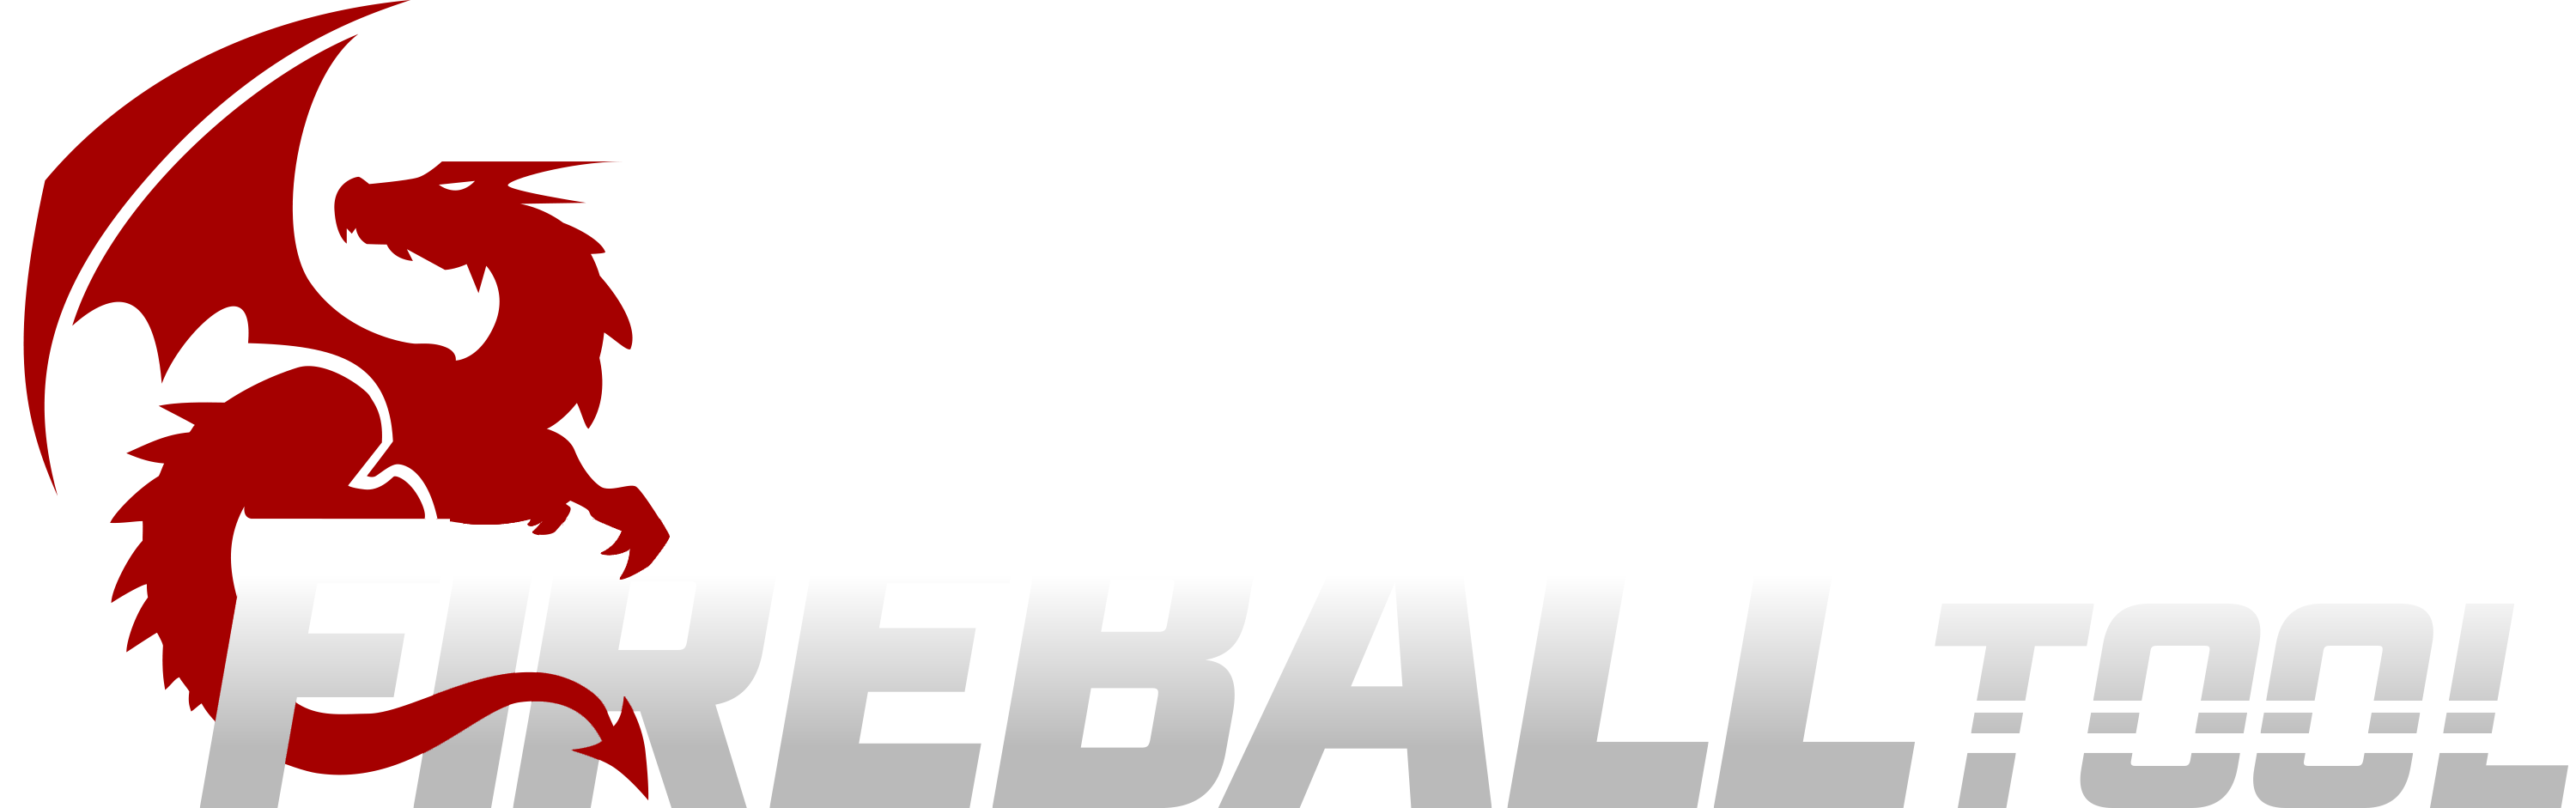 Fireball Tool logo